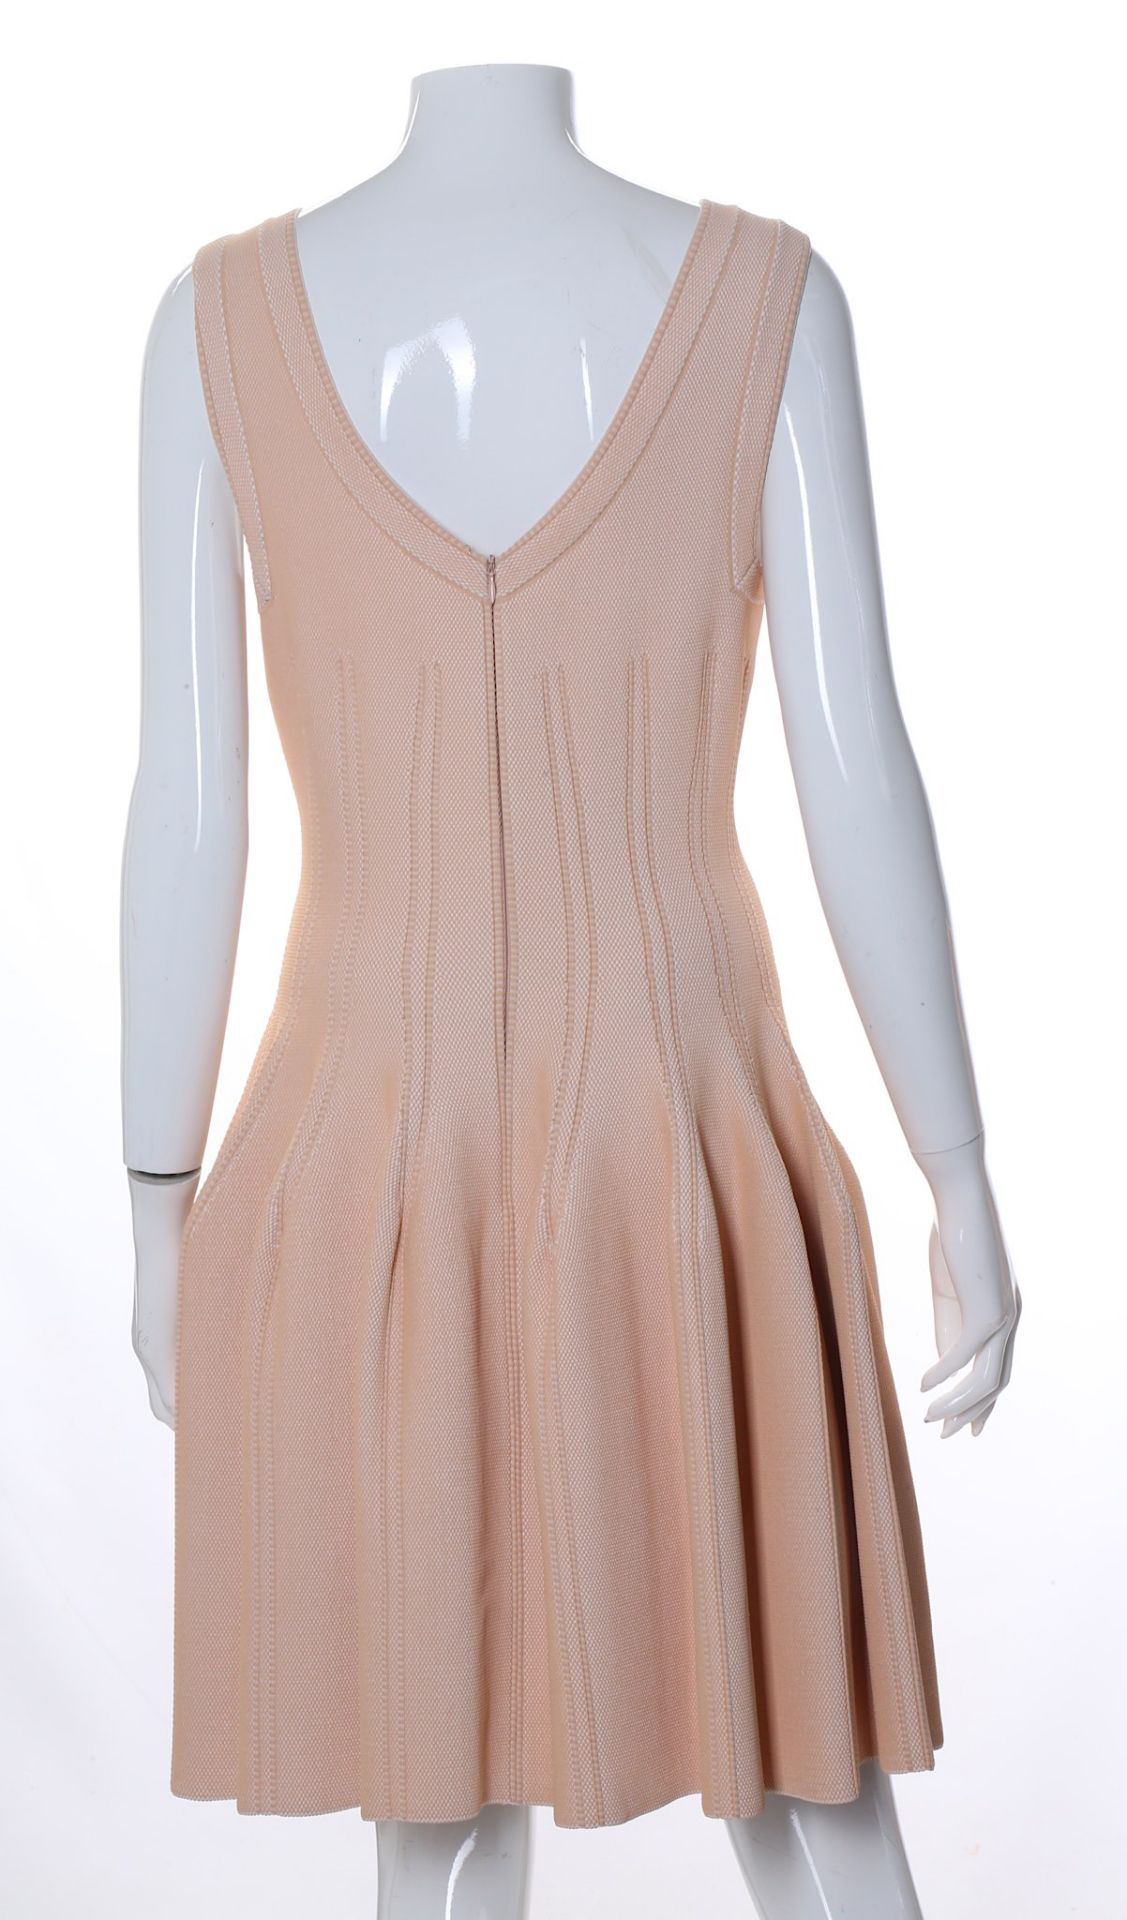 Alaia Nude Pleated Flared Dress, sleeveless design - Image 3 of 4